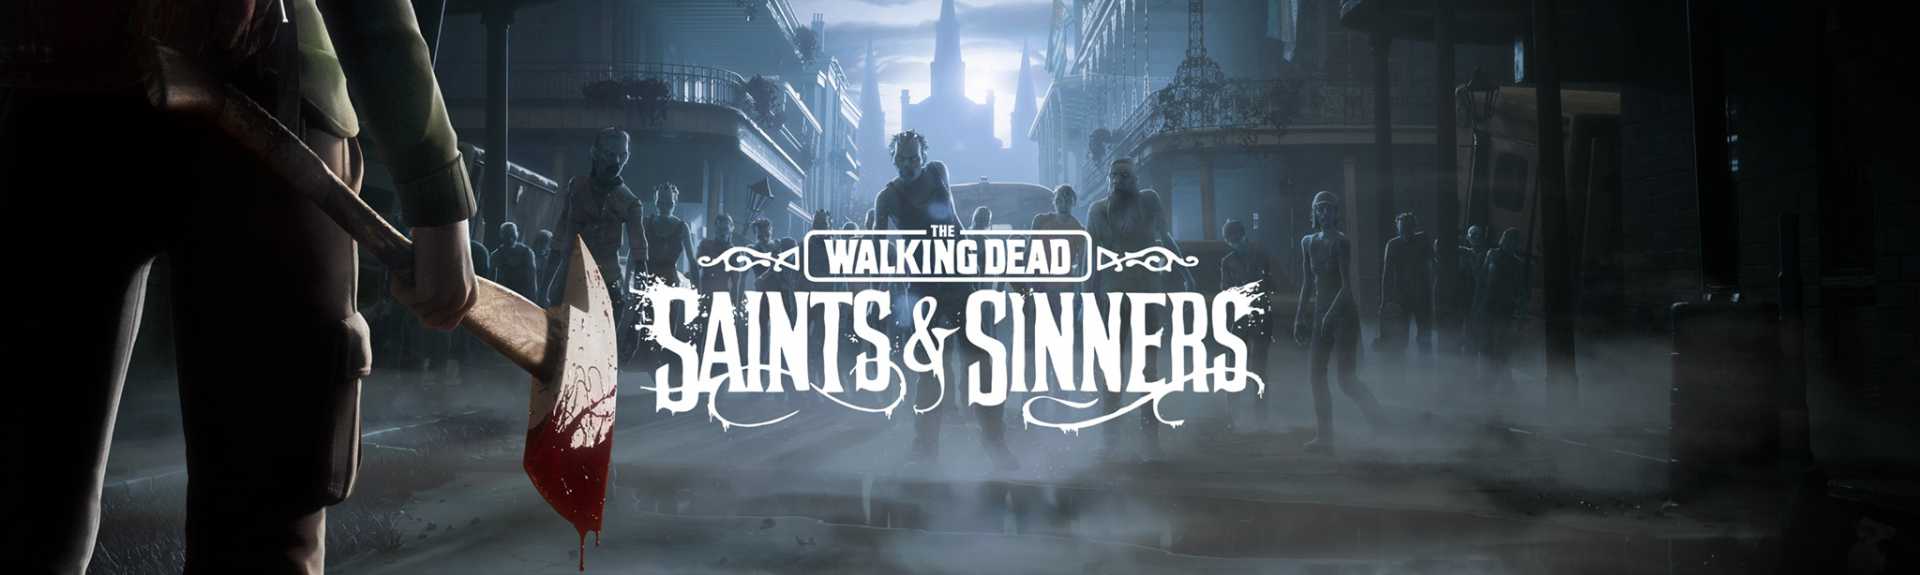 The Walking Dead: Saints & Sinners - ANÁLISIS